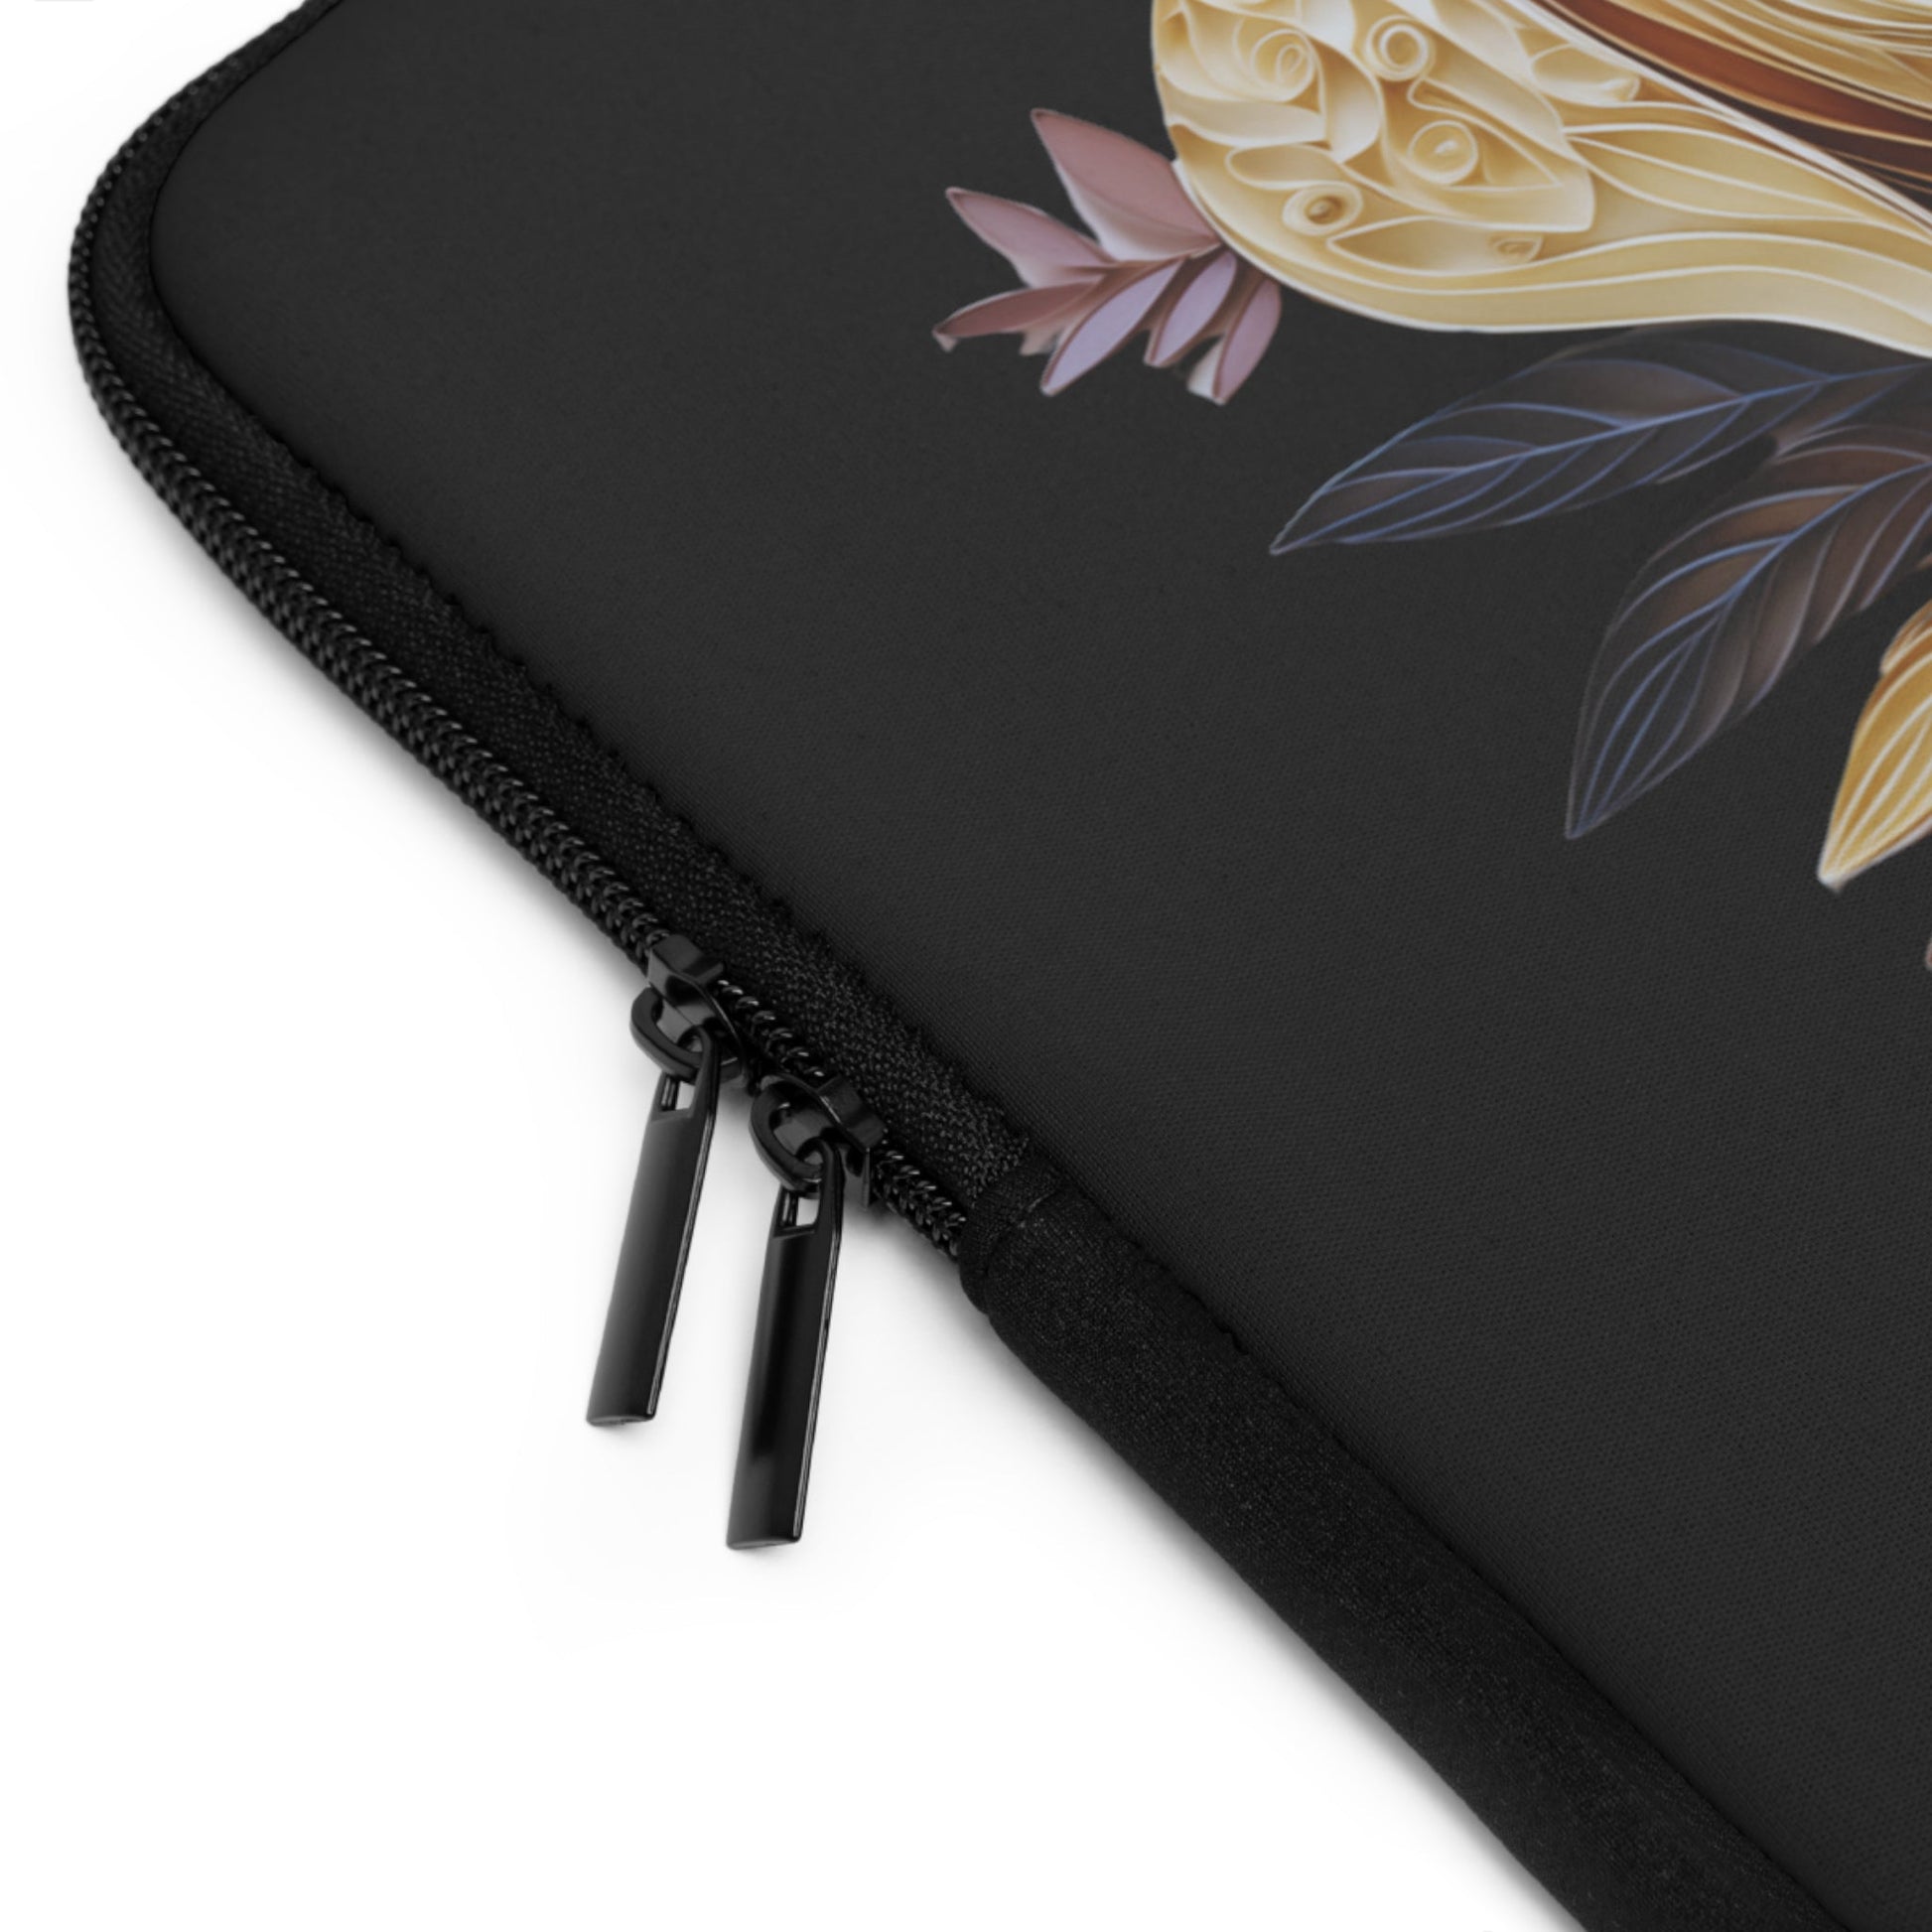 Neoprene Laptop Sleeve featuring Quilled Labrador Design - Hobbster